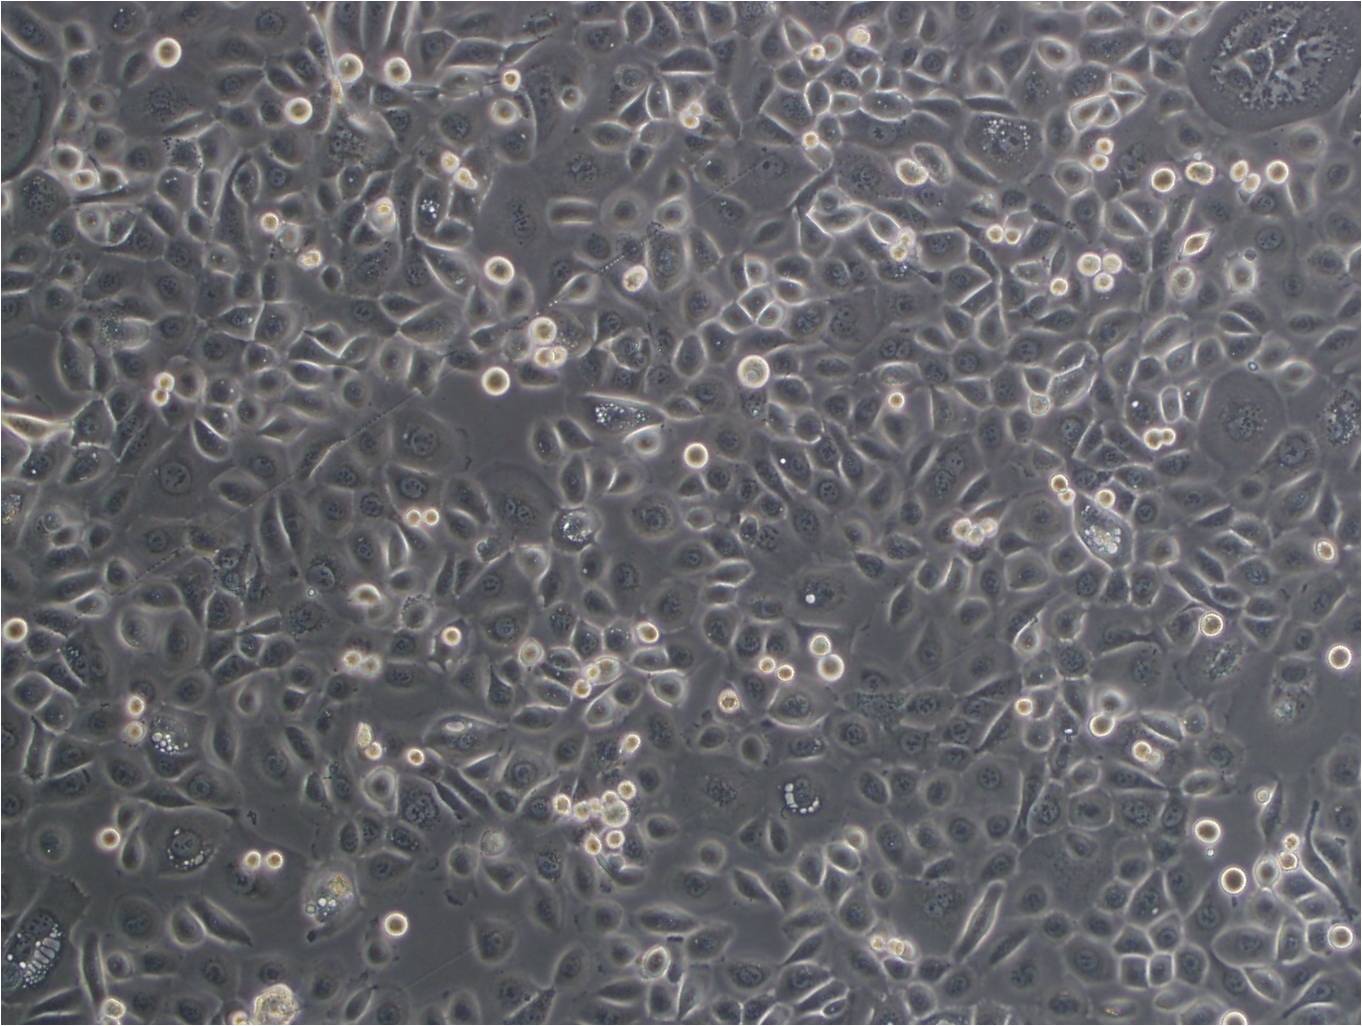 NCI-H1703 Cells|人肺腺鳞癌细胞系,NCI-H1703 Cells